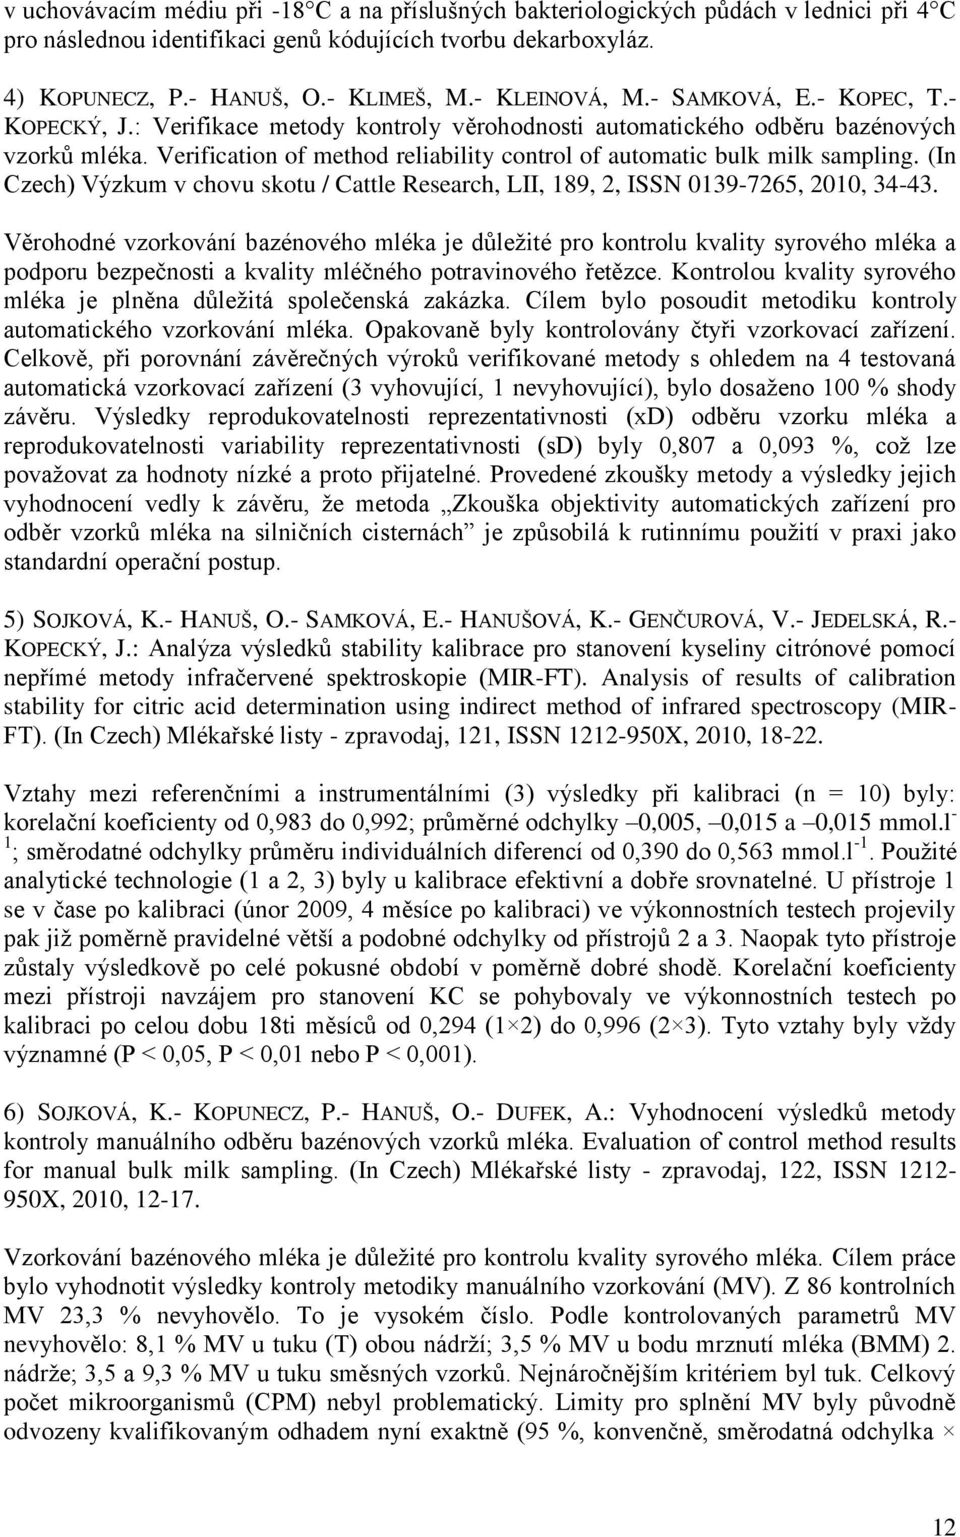 Verification of method reliability control of automatic bulk milk sampling. (In Czech) Výzkum v chovu skotu / Cattle Research, LII, 189, 2, ISSN 0139-7265, 2010, 34-43.